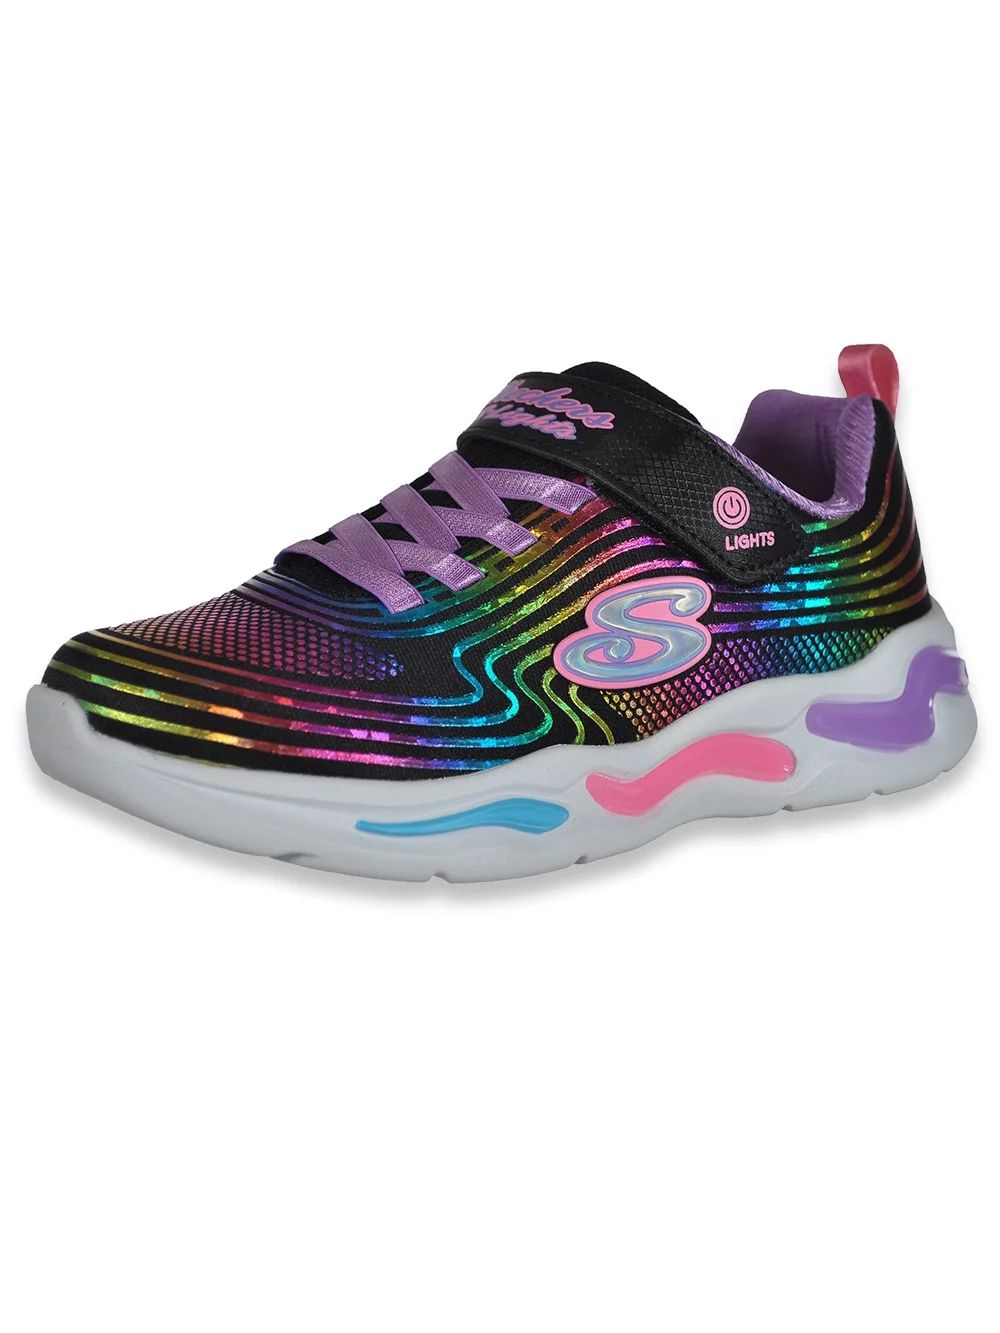 Skechers Girls' Light-Up Rainbow Sneakers - Black Multi, 3 Youth | Walmart (US)